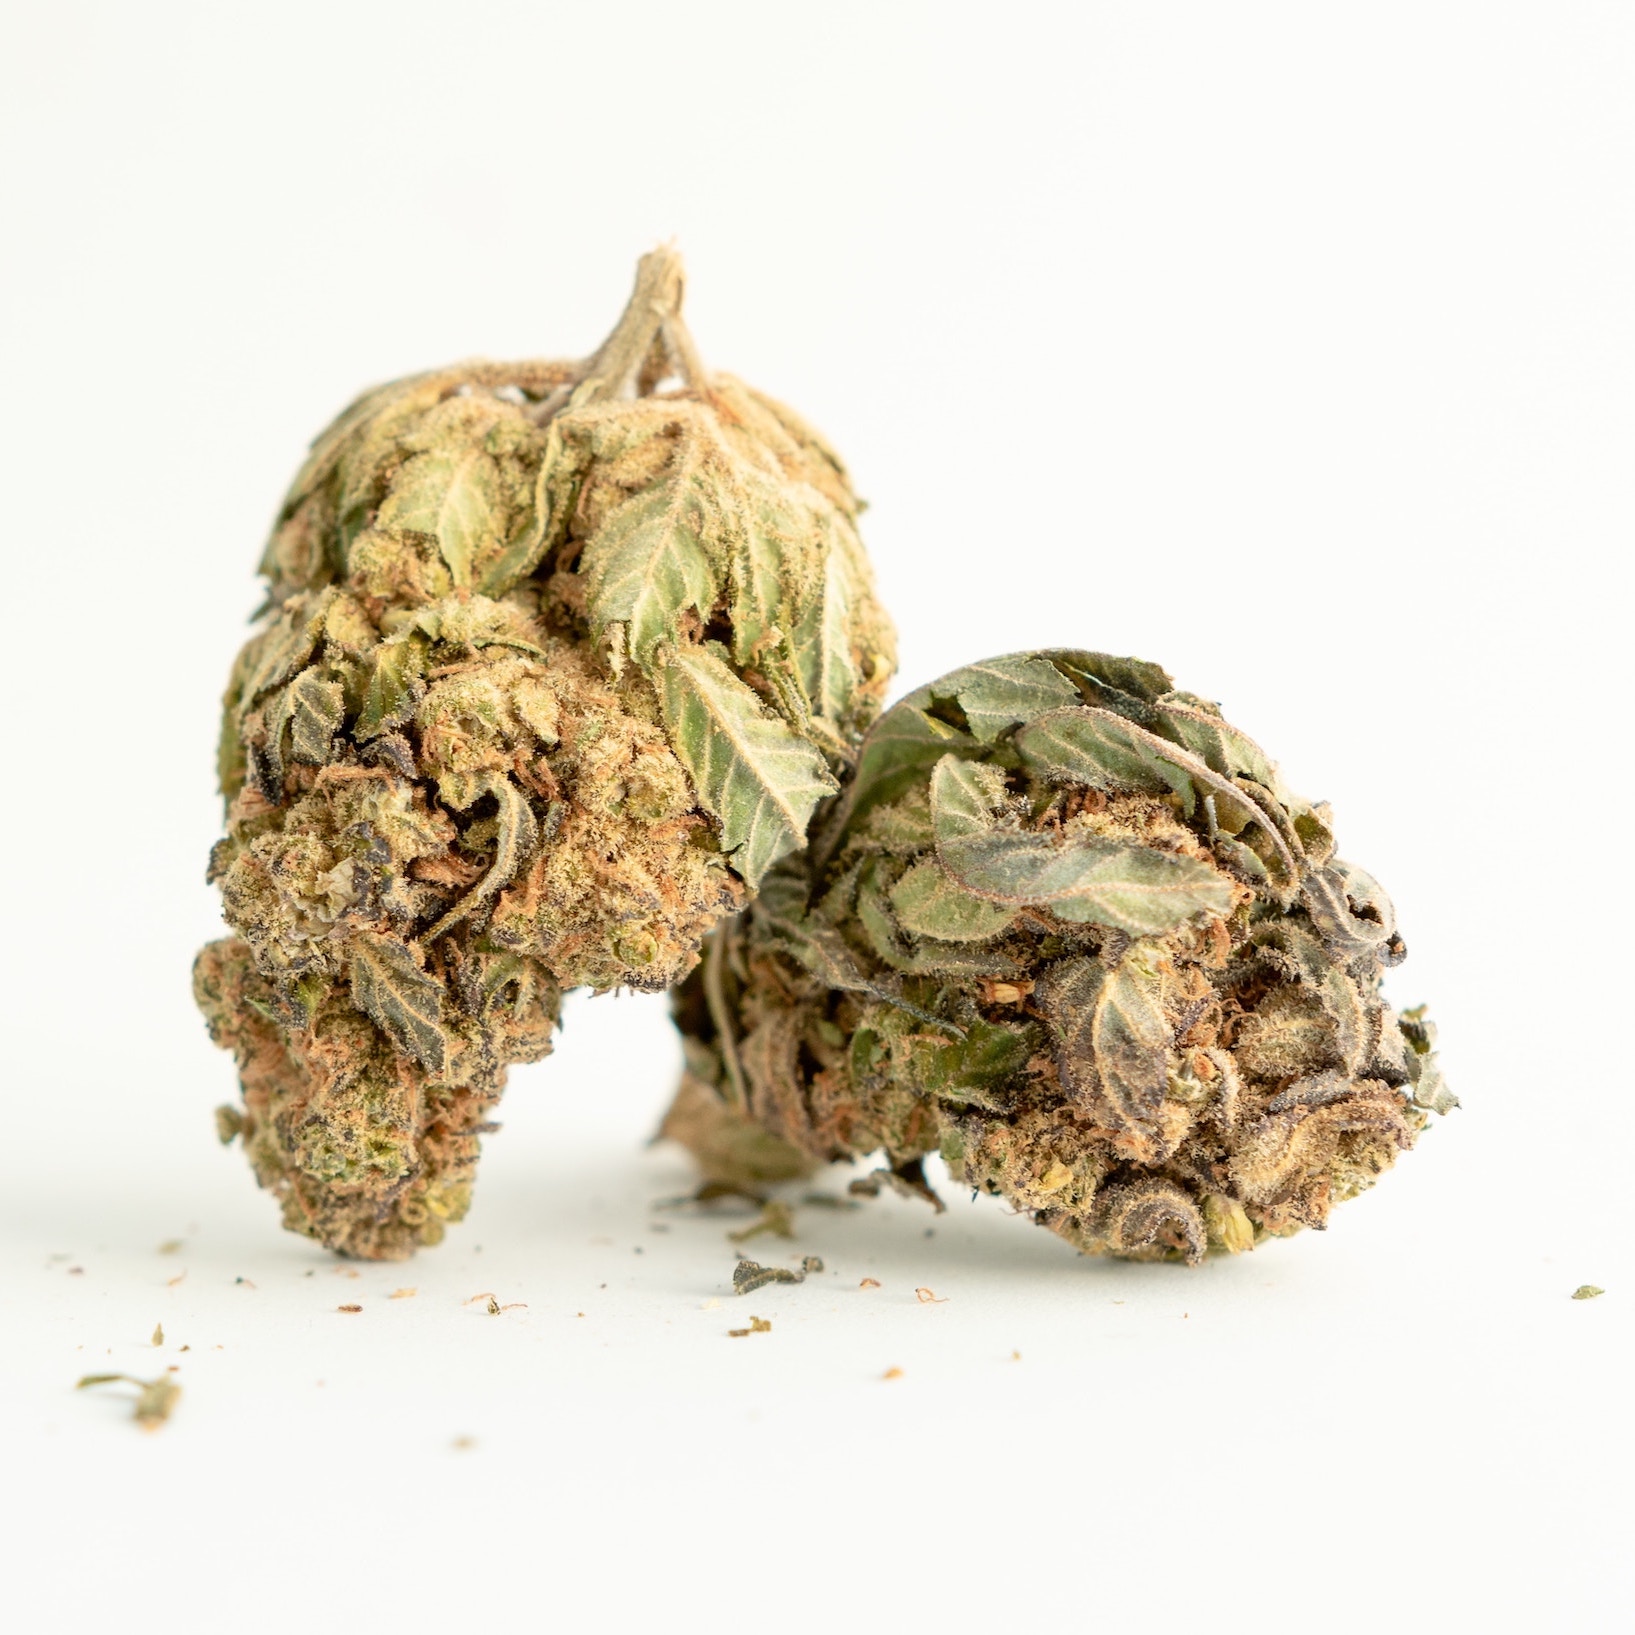 A dried hemp bud from a hemp plant grown for cannabinoids. 